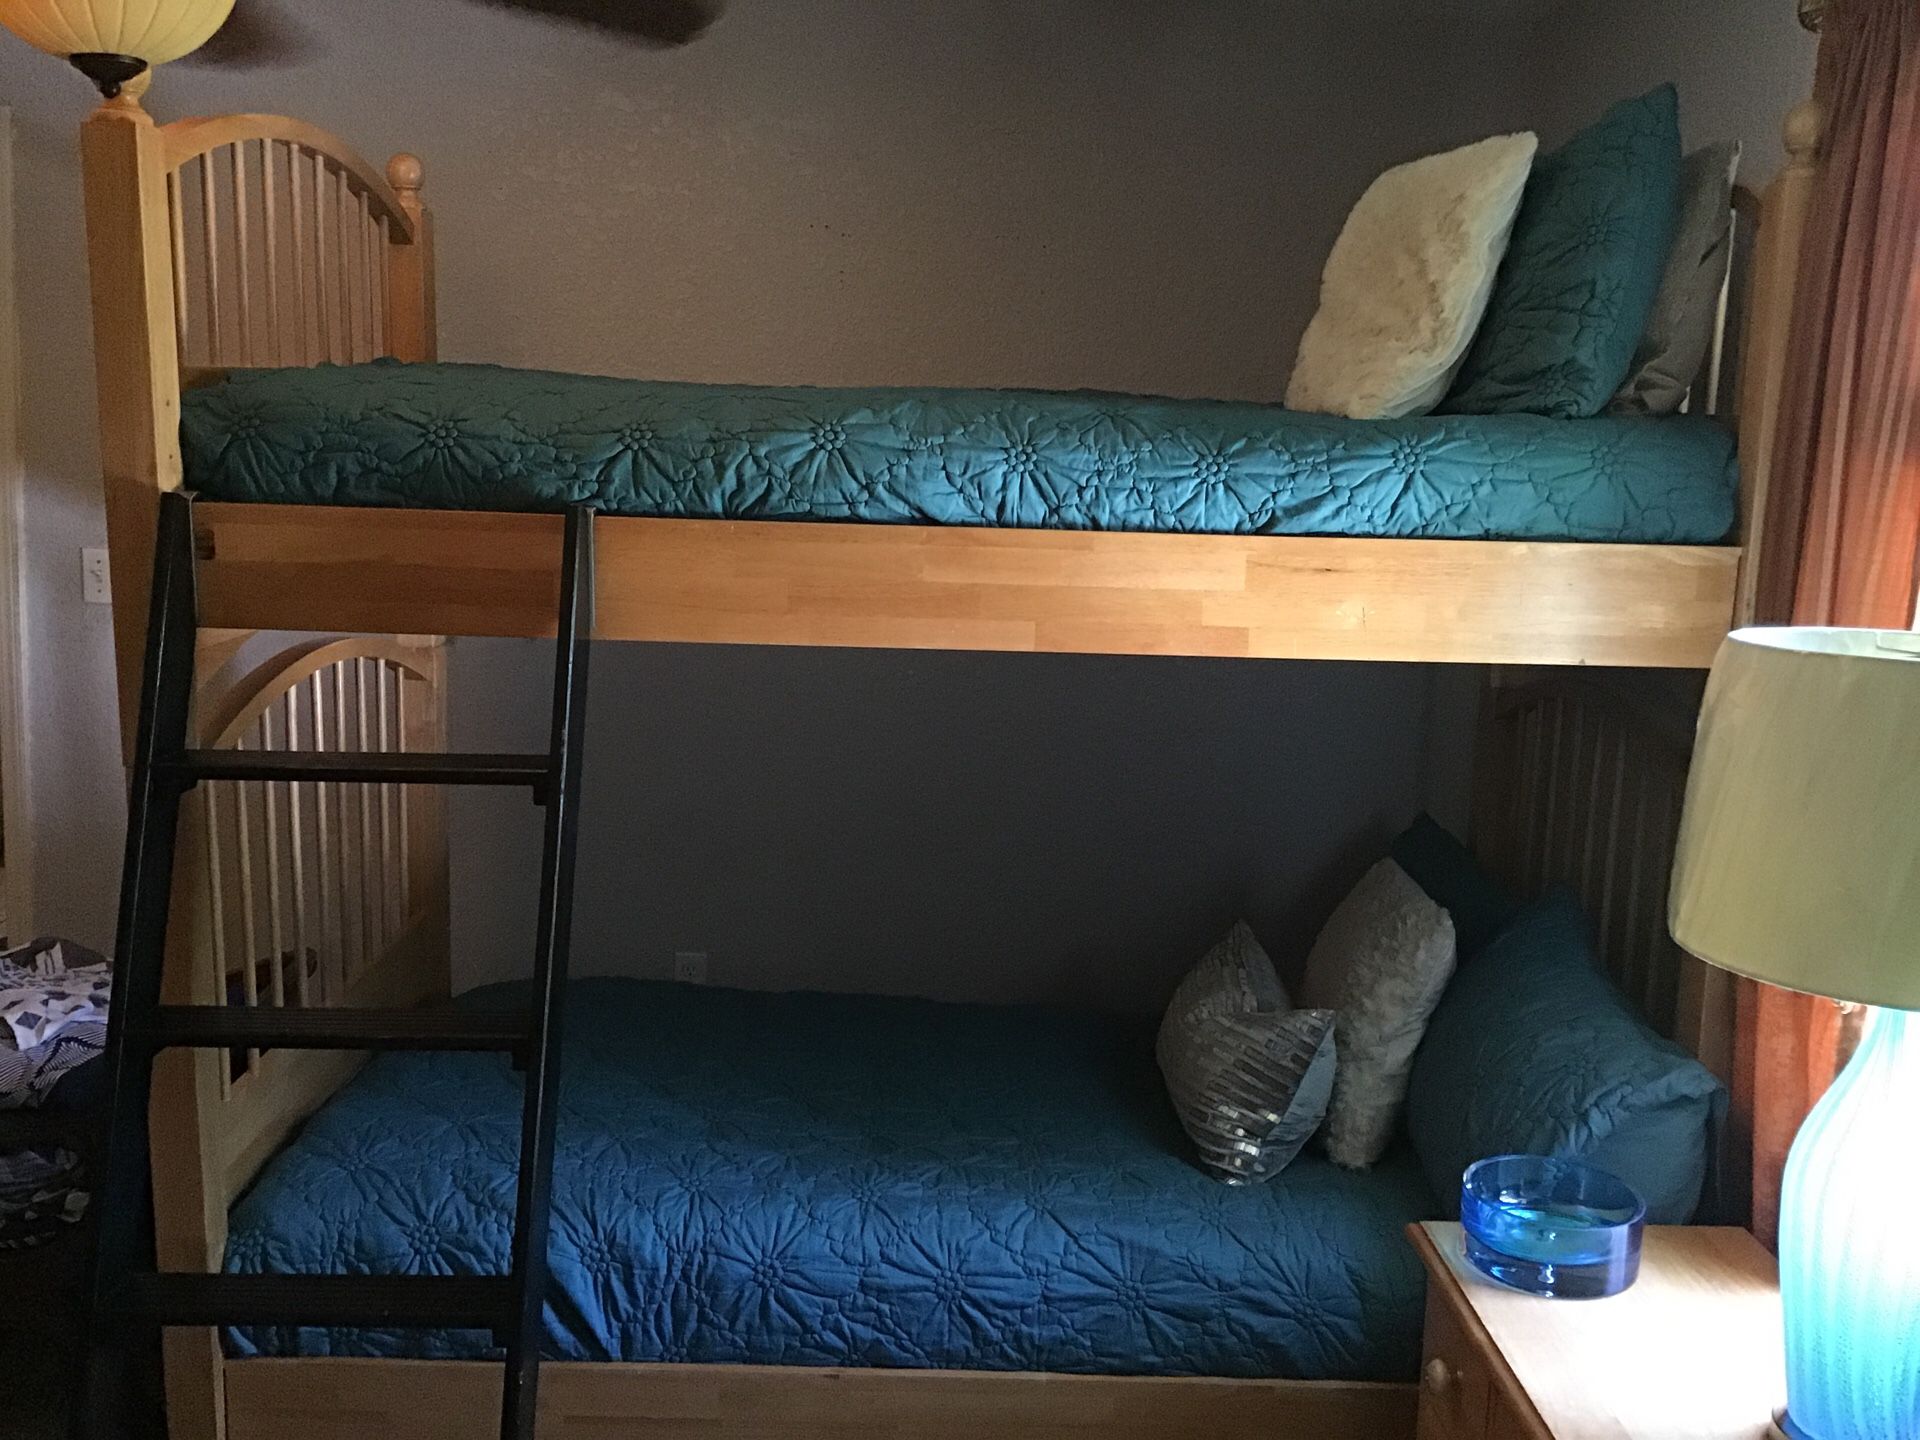 Bunk bed furniture set $800